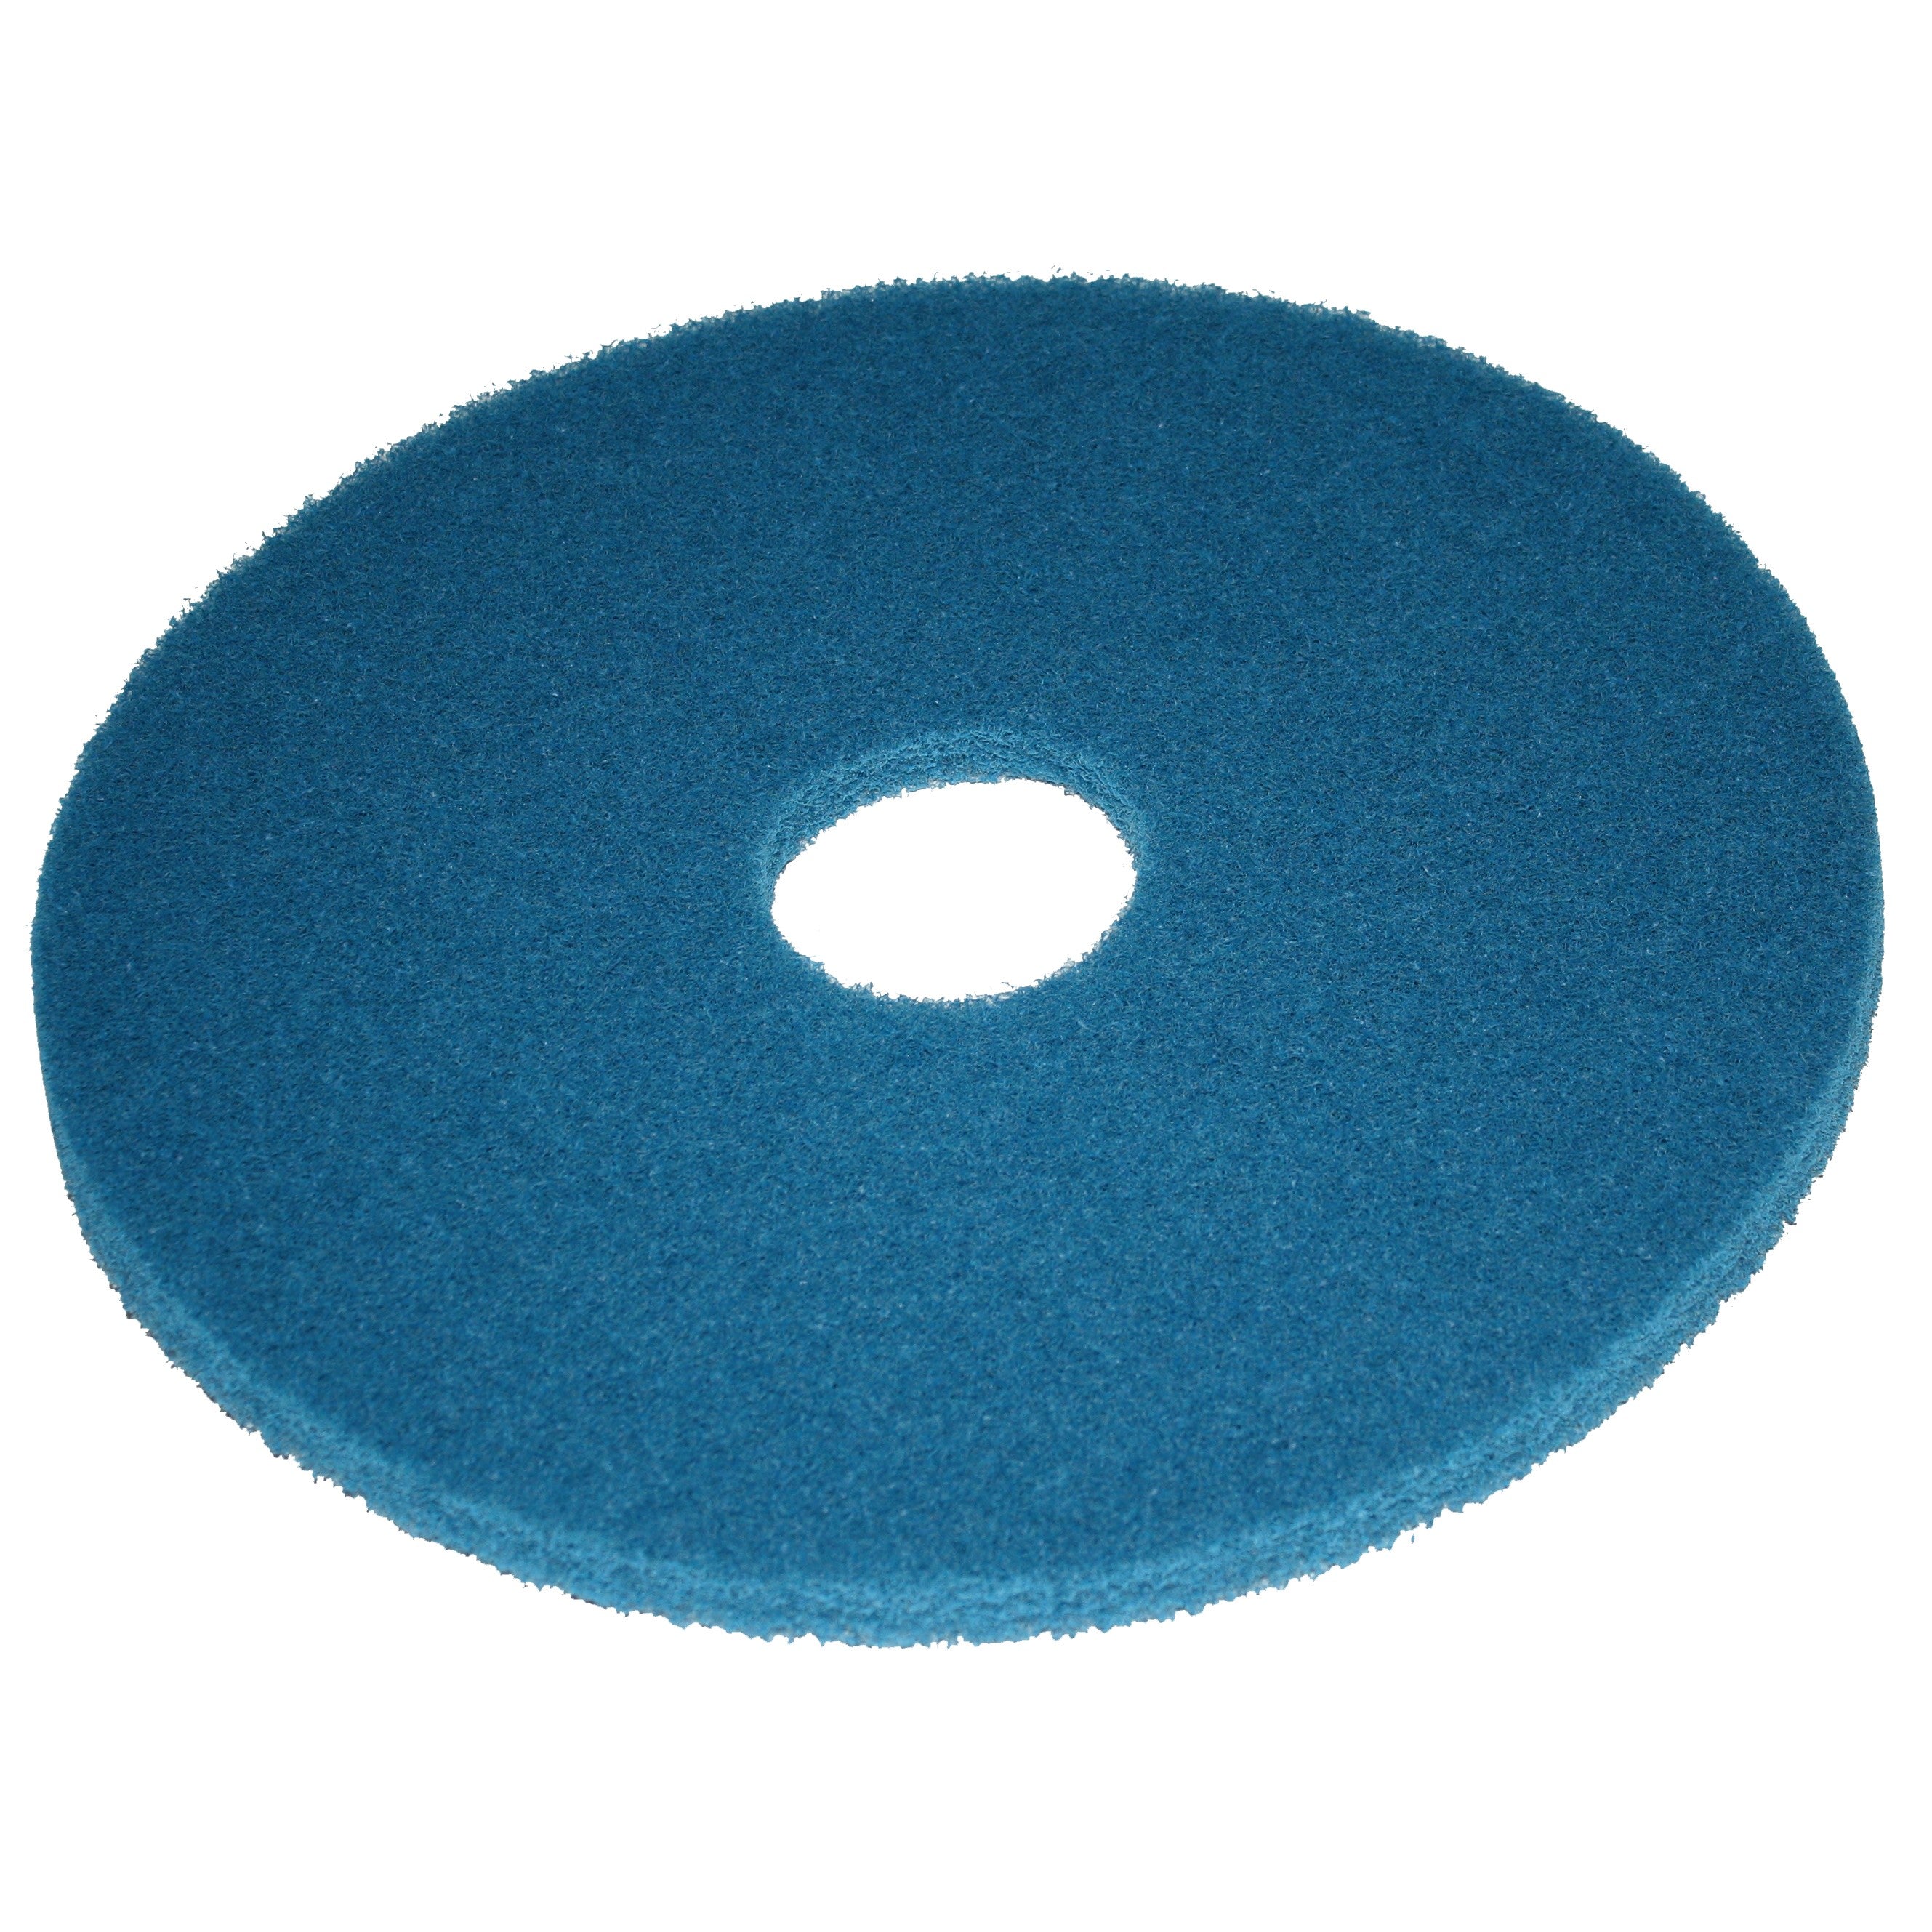 Pad blau, Ø 381 mm, Polyester